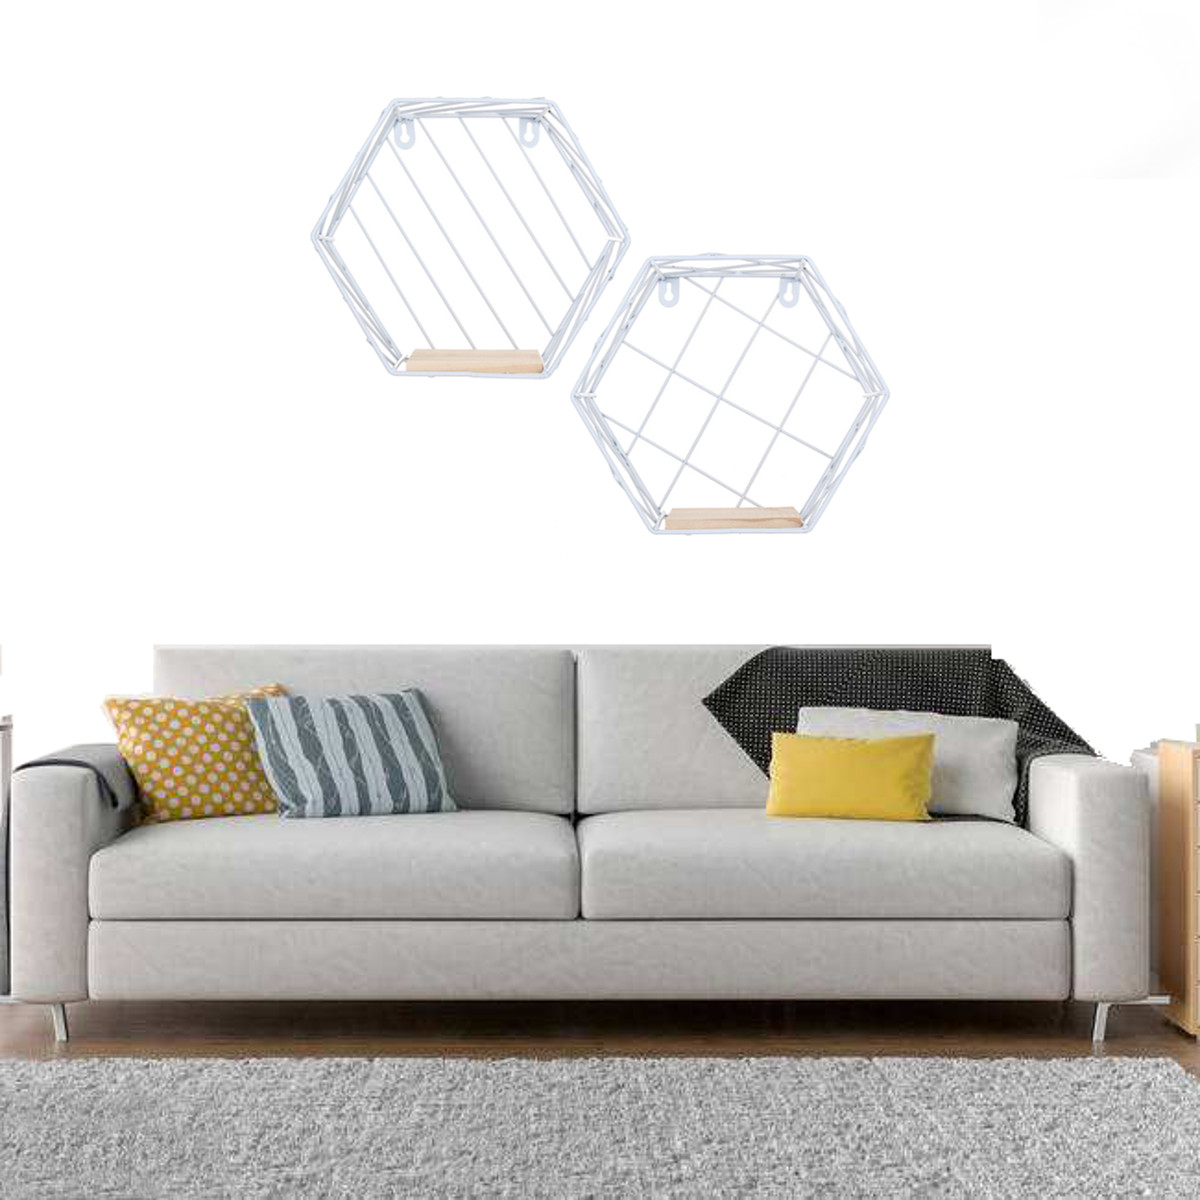 Geometric-Iron-Craft-Wall-Book-Shelf-Rack-Storage-Industrial-Style-Home-Decorations-1376059-3